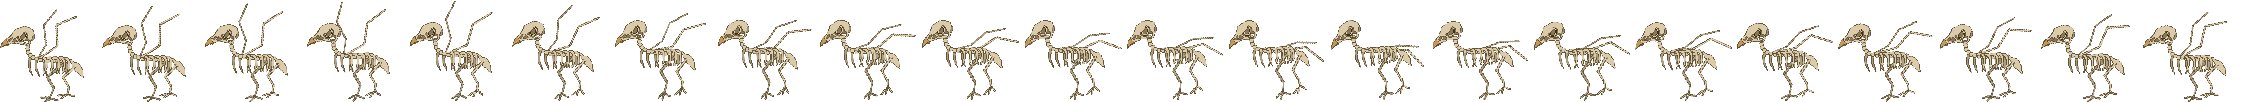 skeletonbird.png